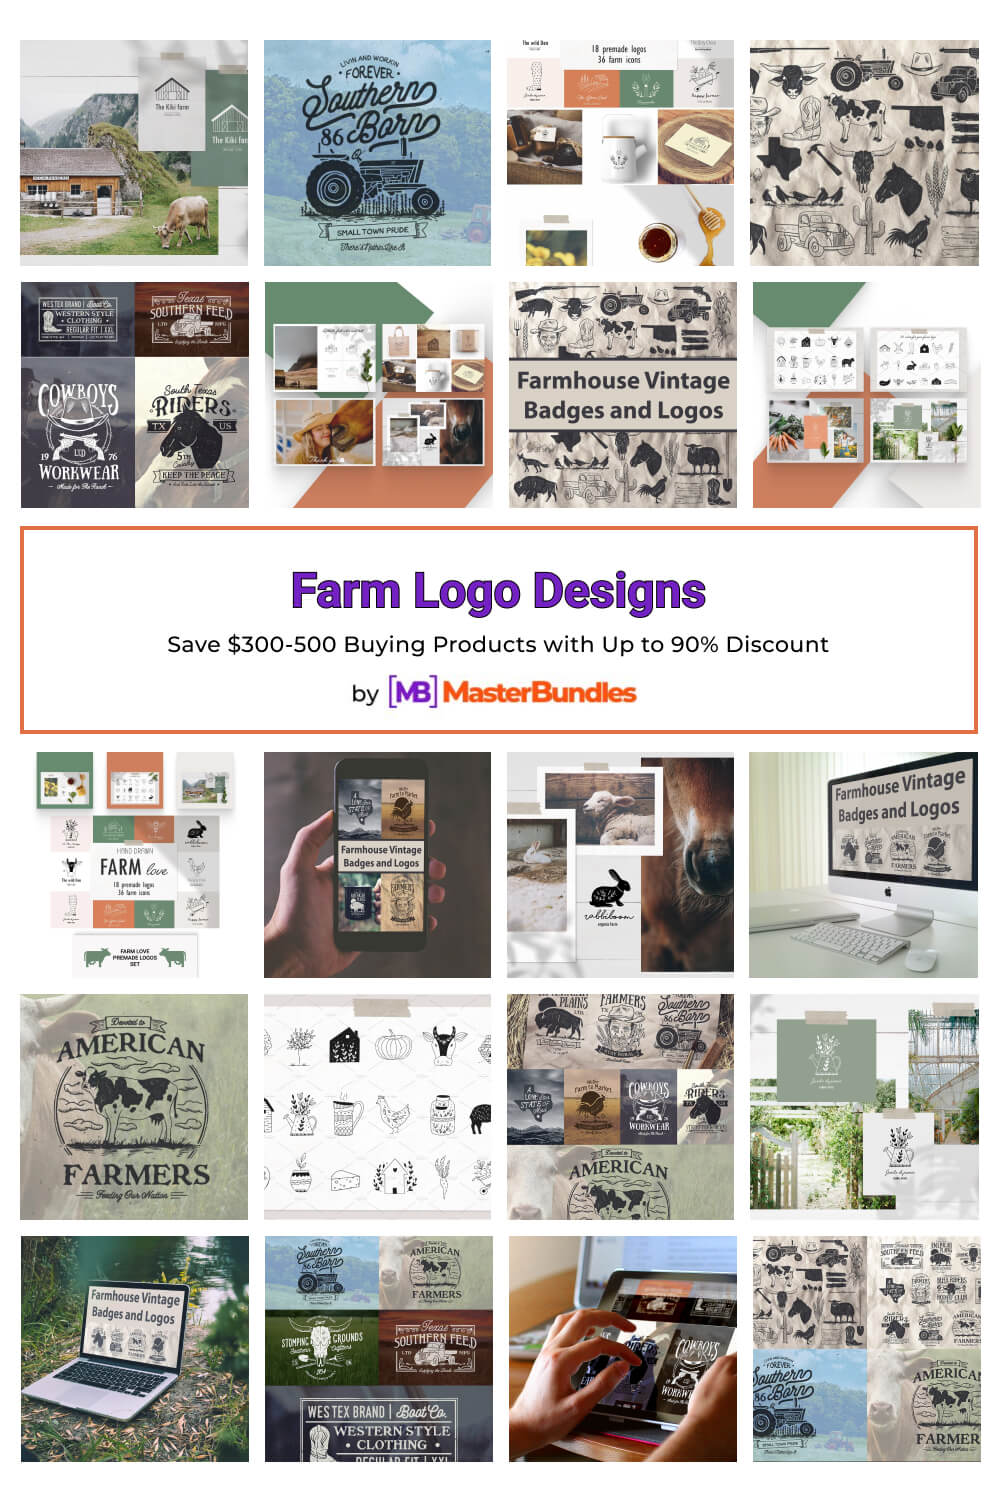 farm logo designs pinterest image.